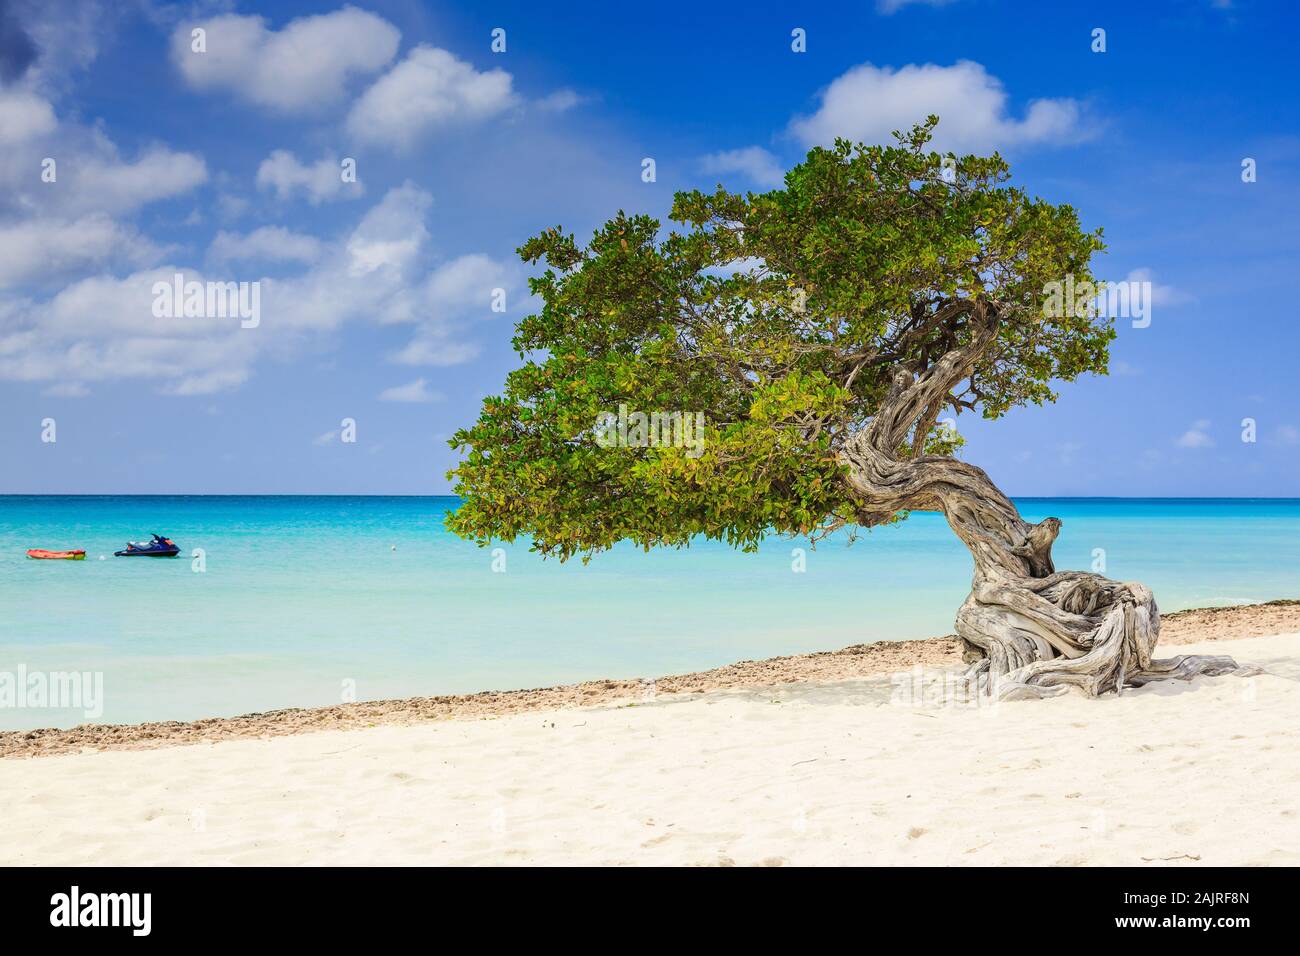 Aruba, Netherlands Antilles. Divi divi tree on the beach. Stock Photo